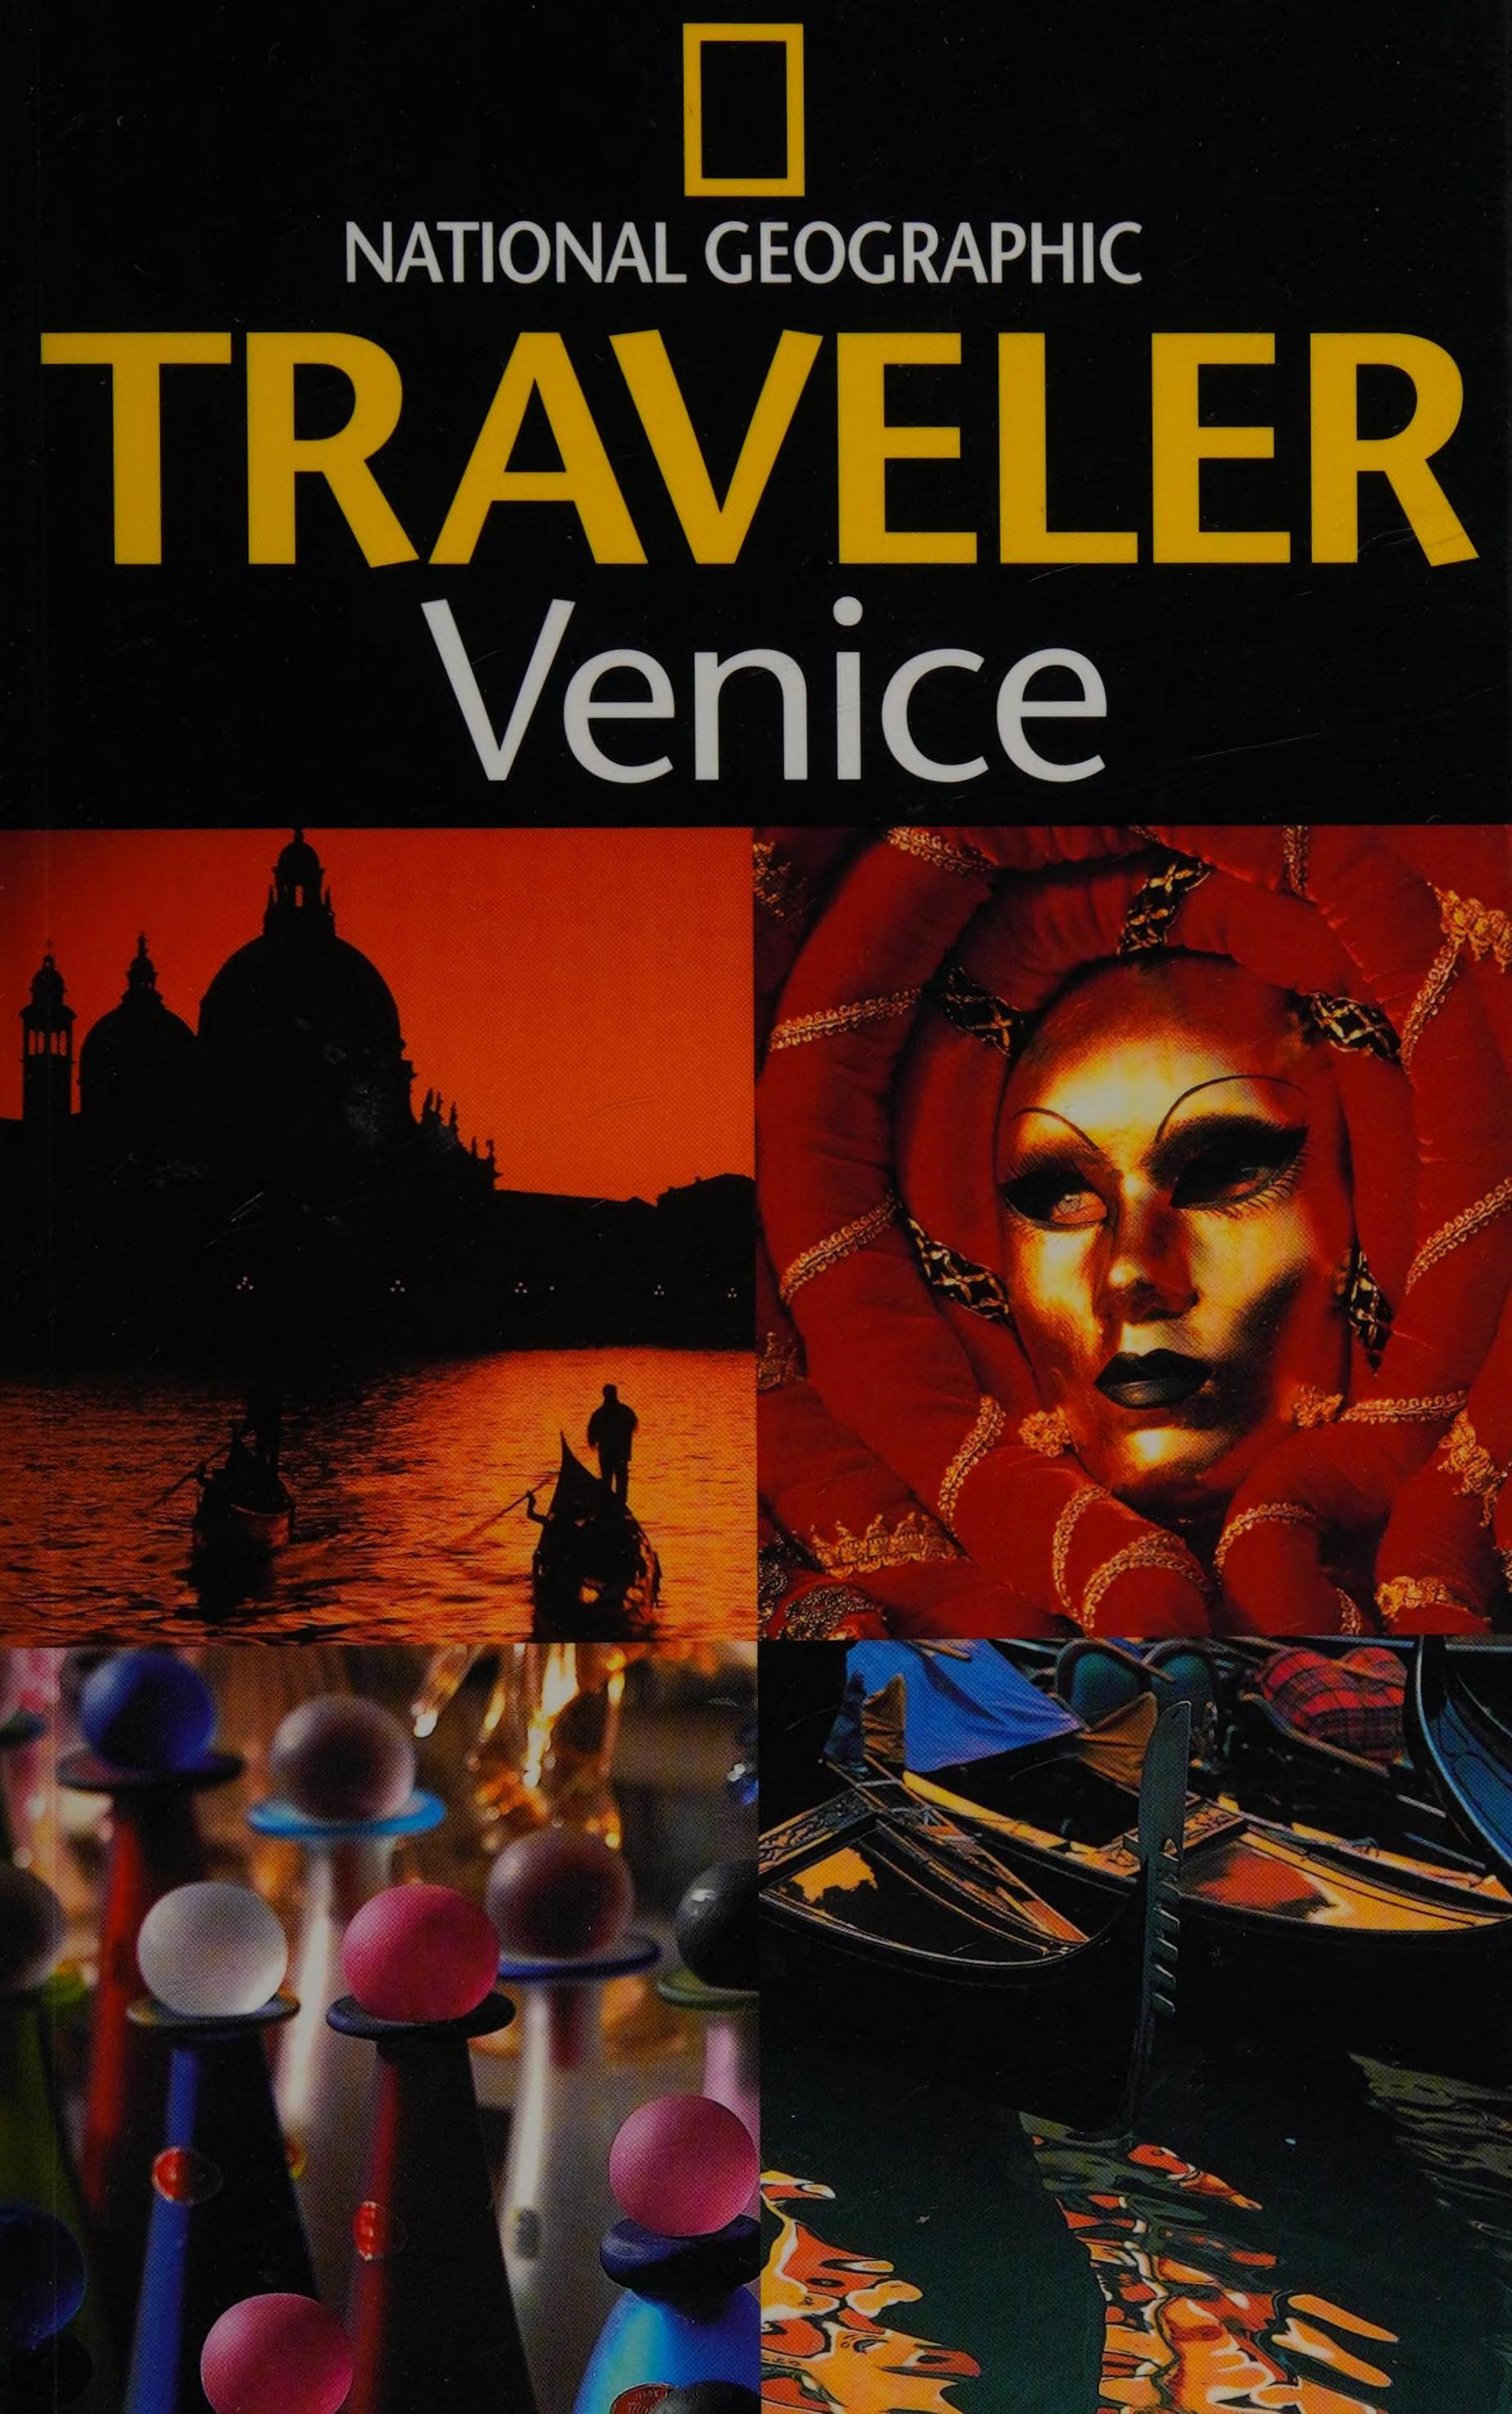 National Geographic Traveler: Venice by Erla Zwingle